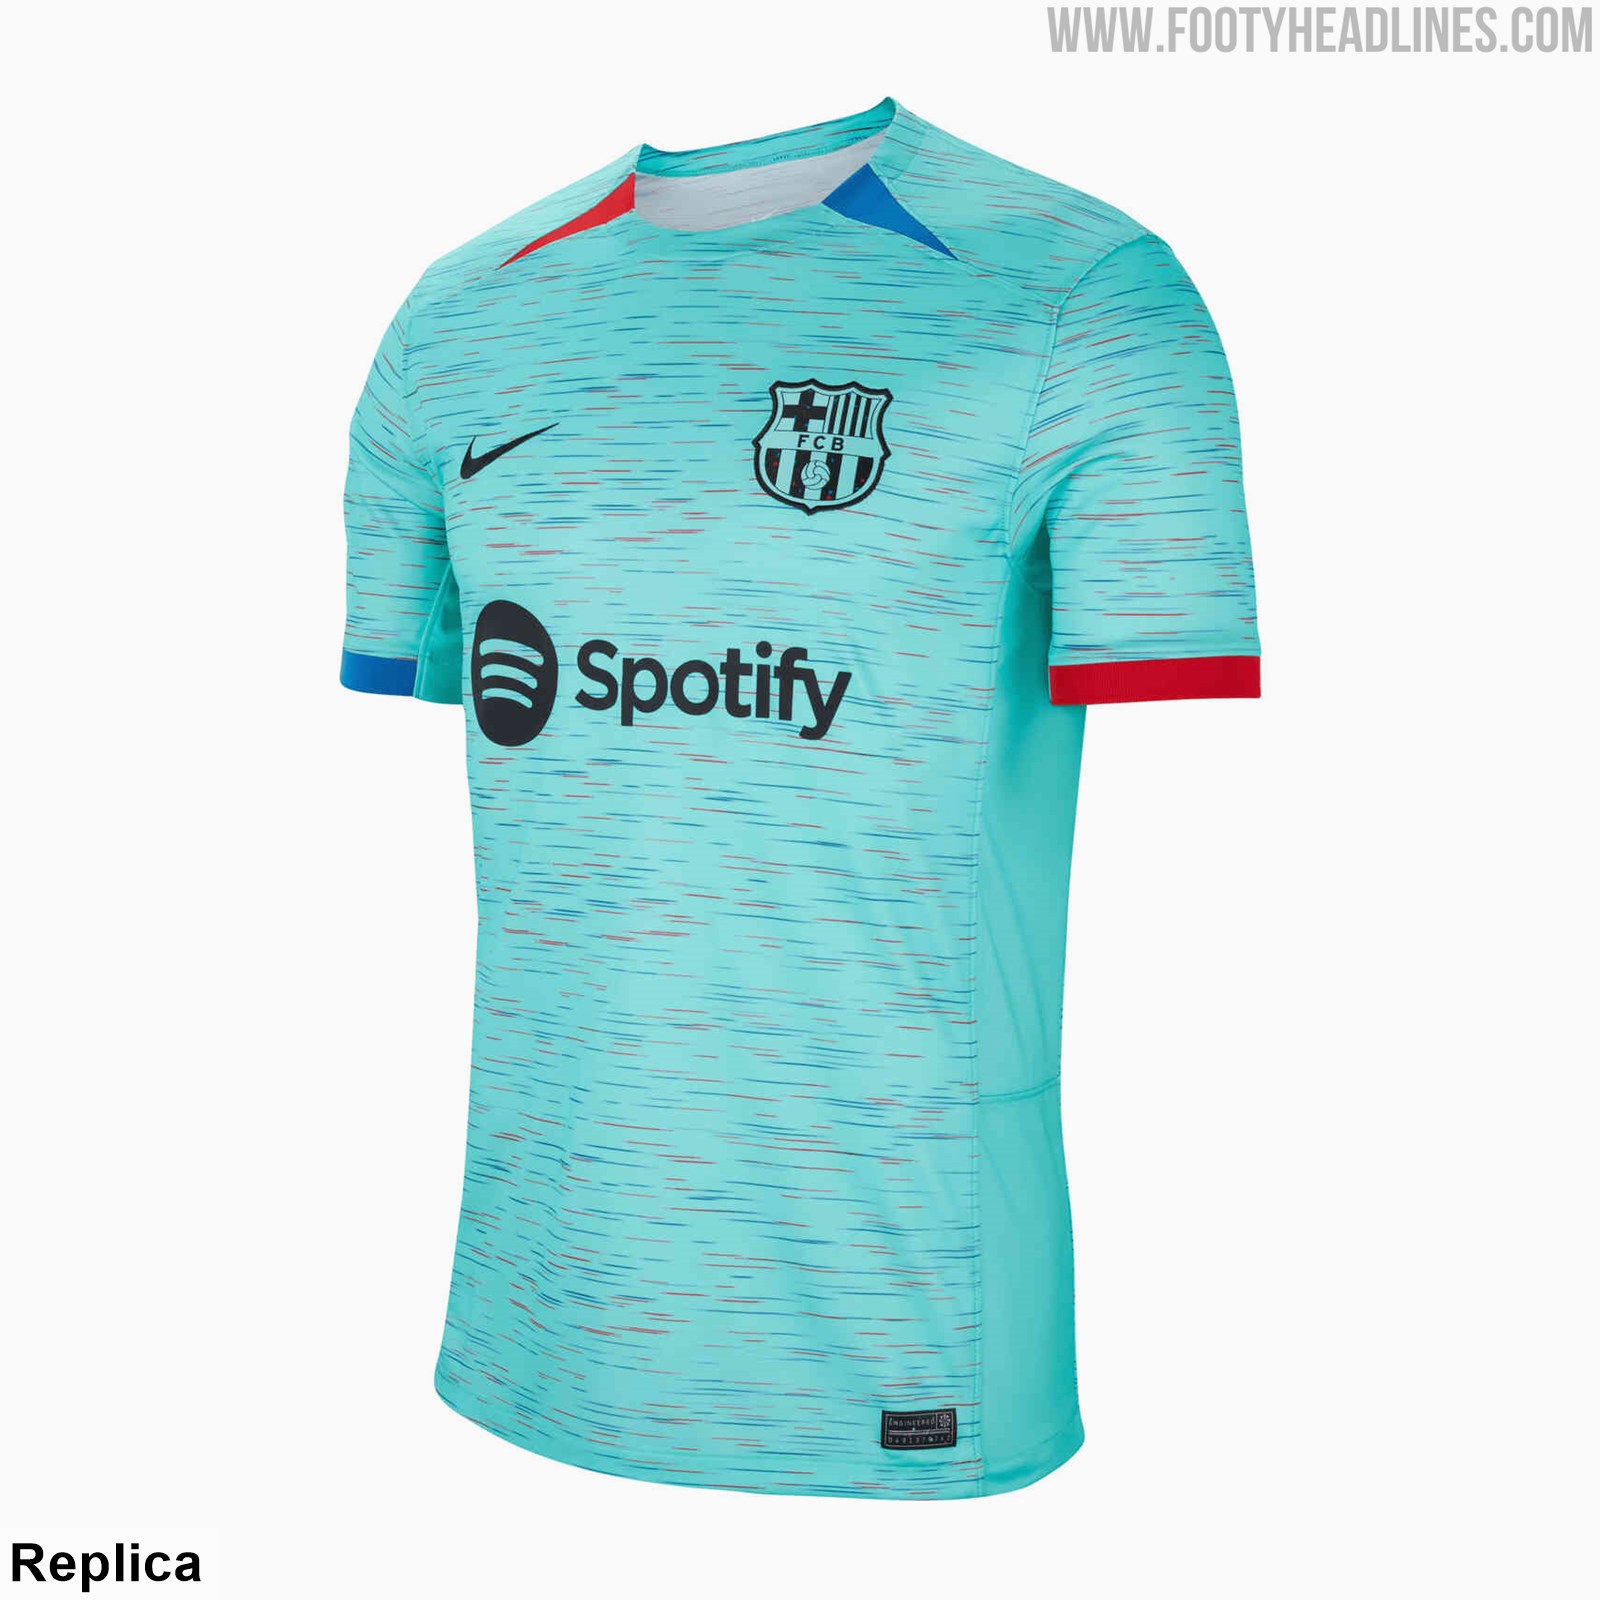 FC Barcelona 13/14 Home + Away Kits Released + Third Kit Info